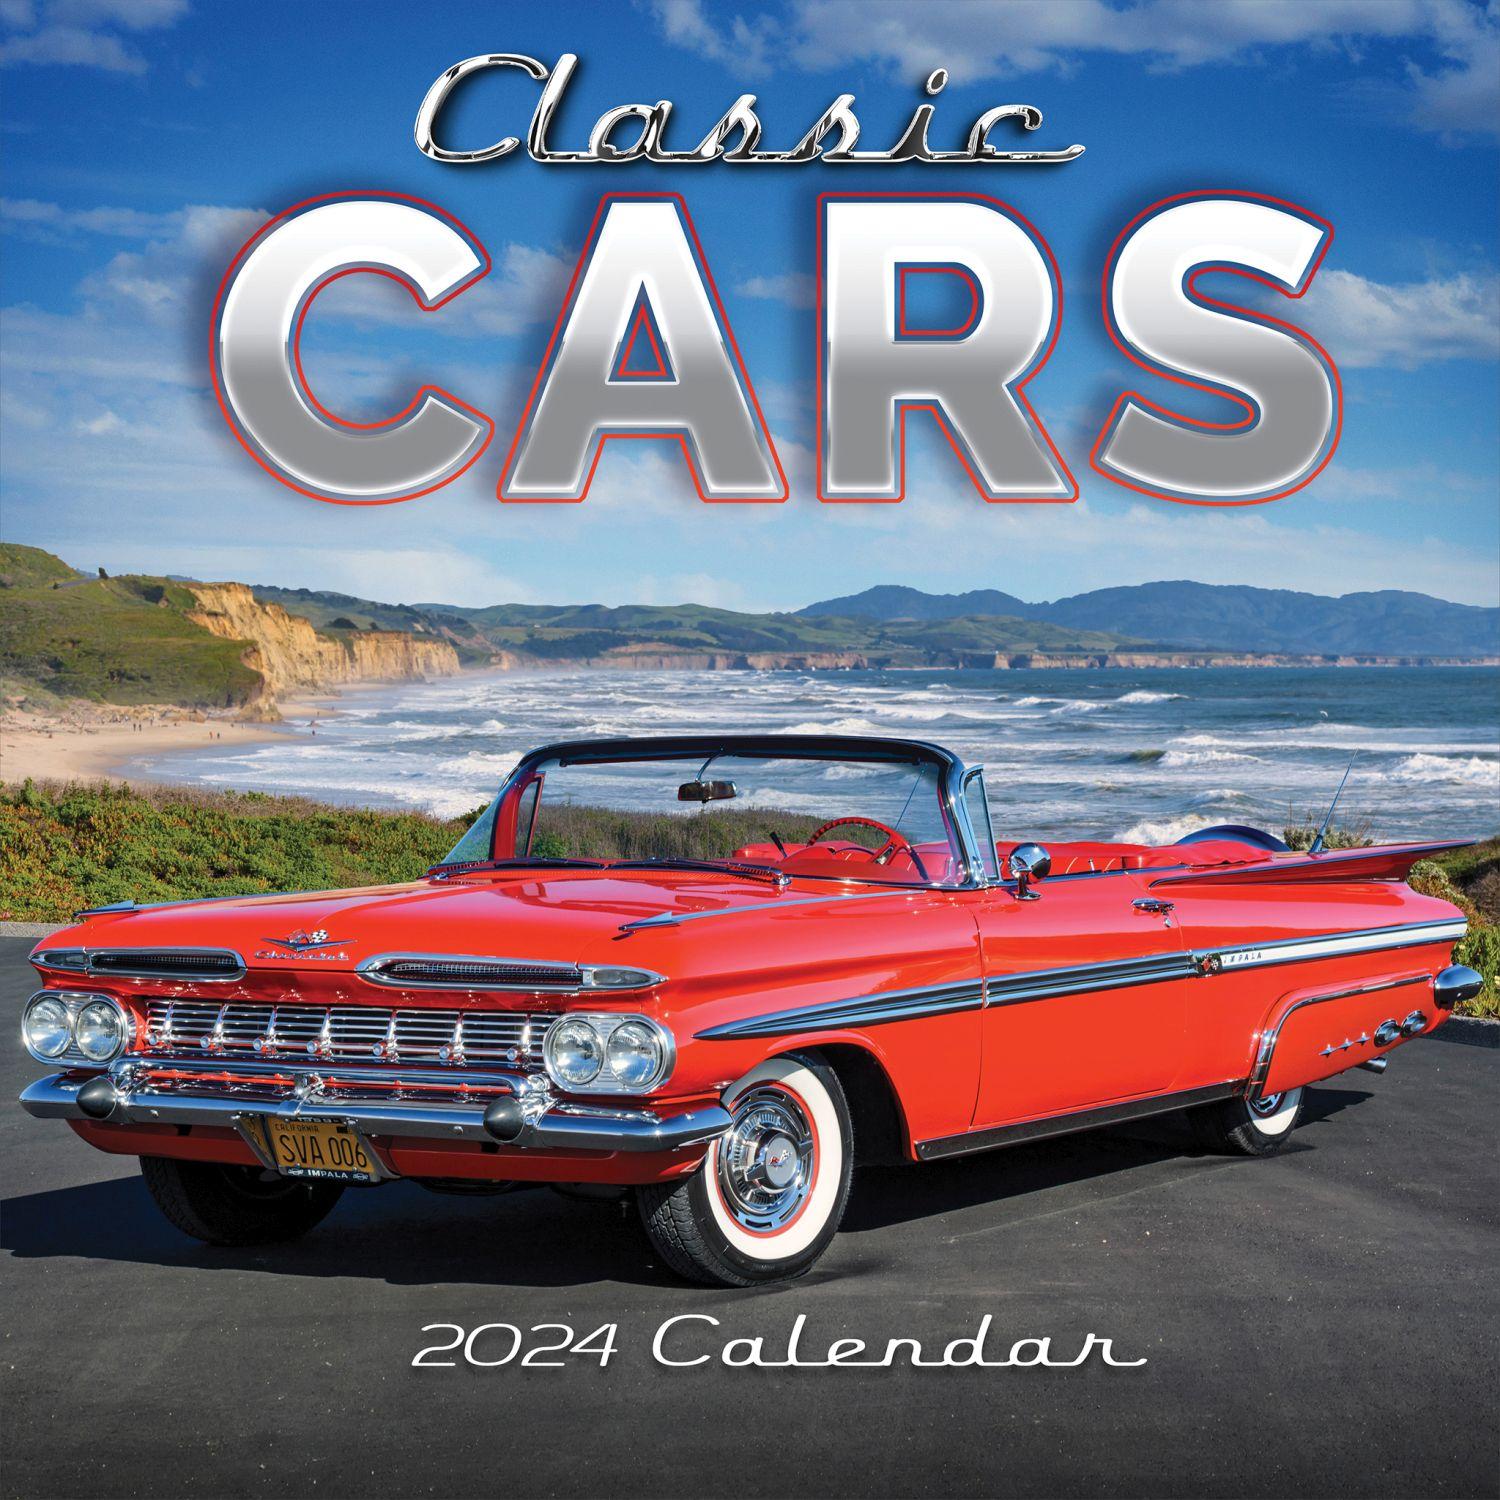 Classic Cars 2024 Wall Calendar